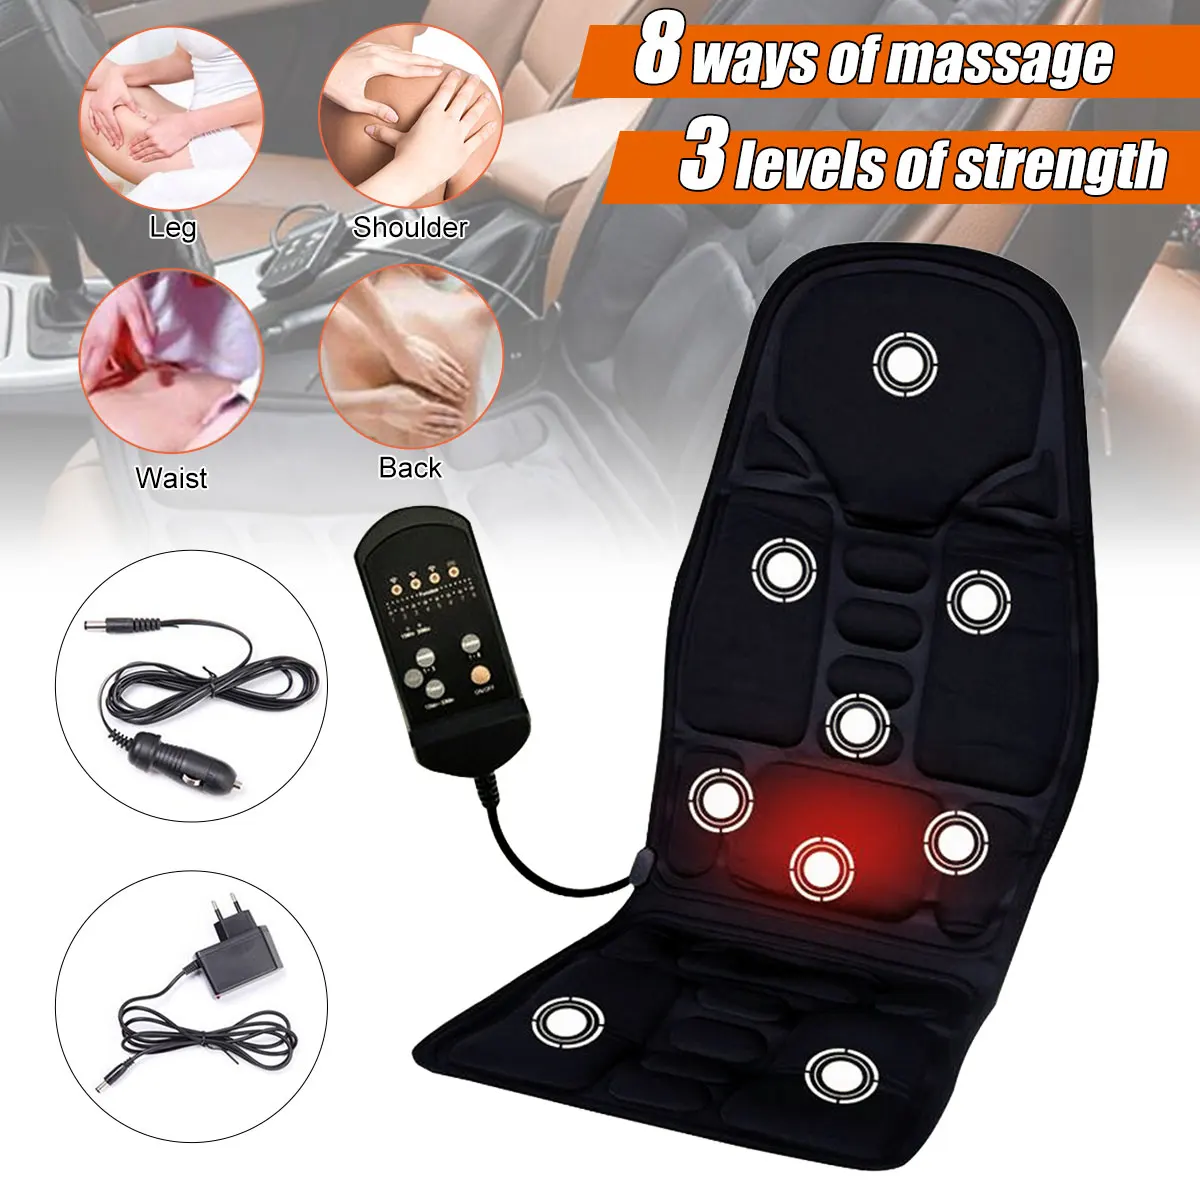 

Massage Cushion for Car 12V 3 Gears 8 Mods Heating Vibration Back Massage Chair Home Office Lumbar Neck Mattress Pain Relief